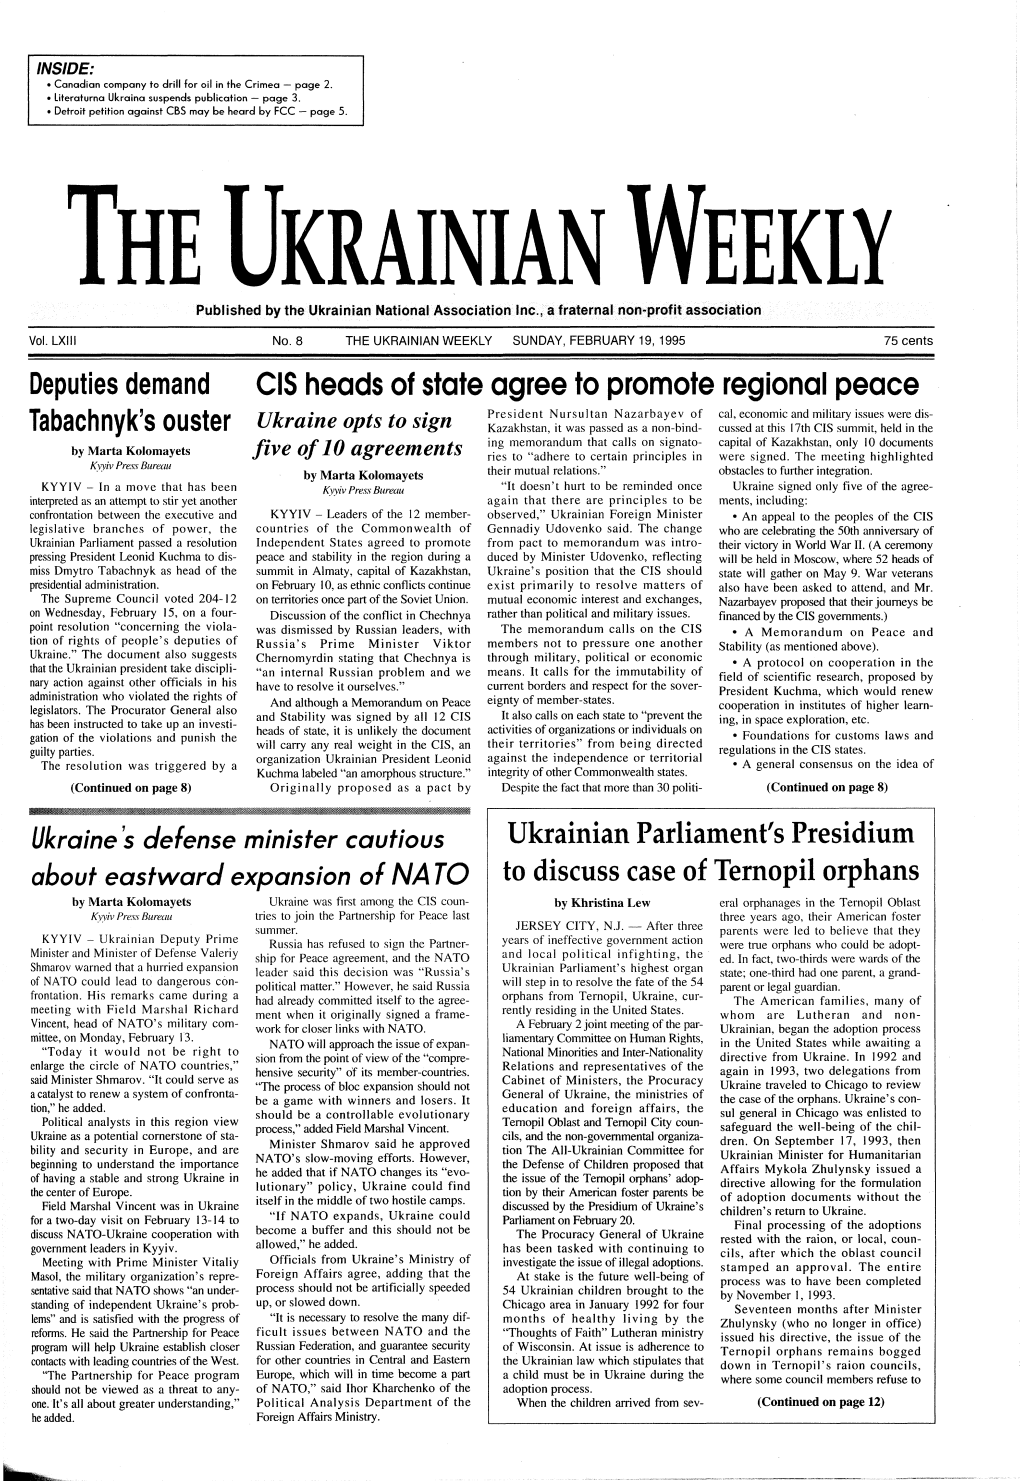 The Ukrainian Weekly 1995, No.8